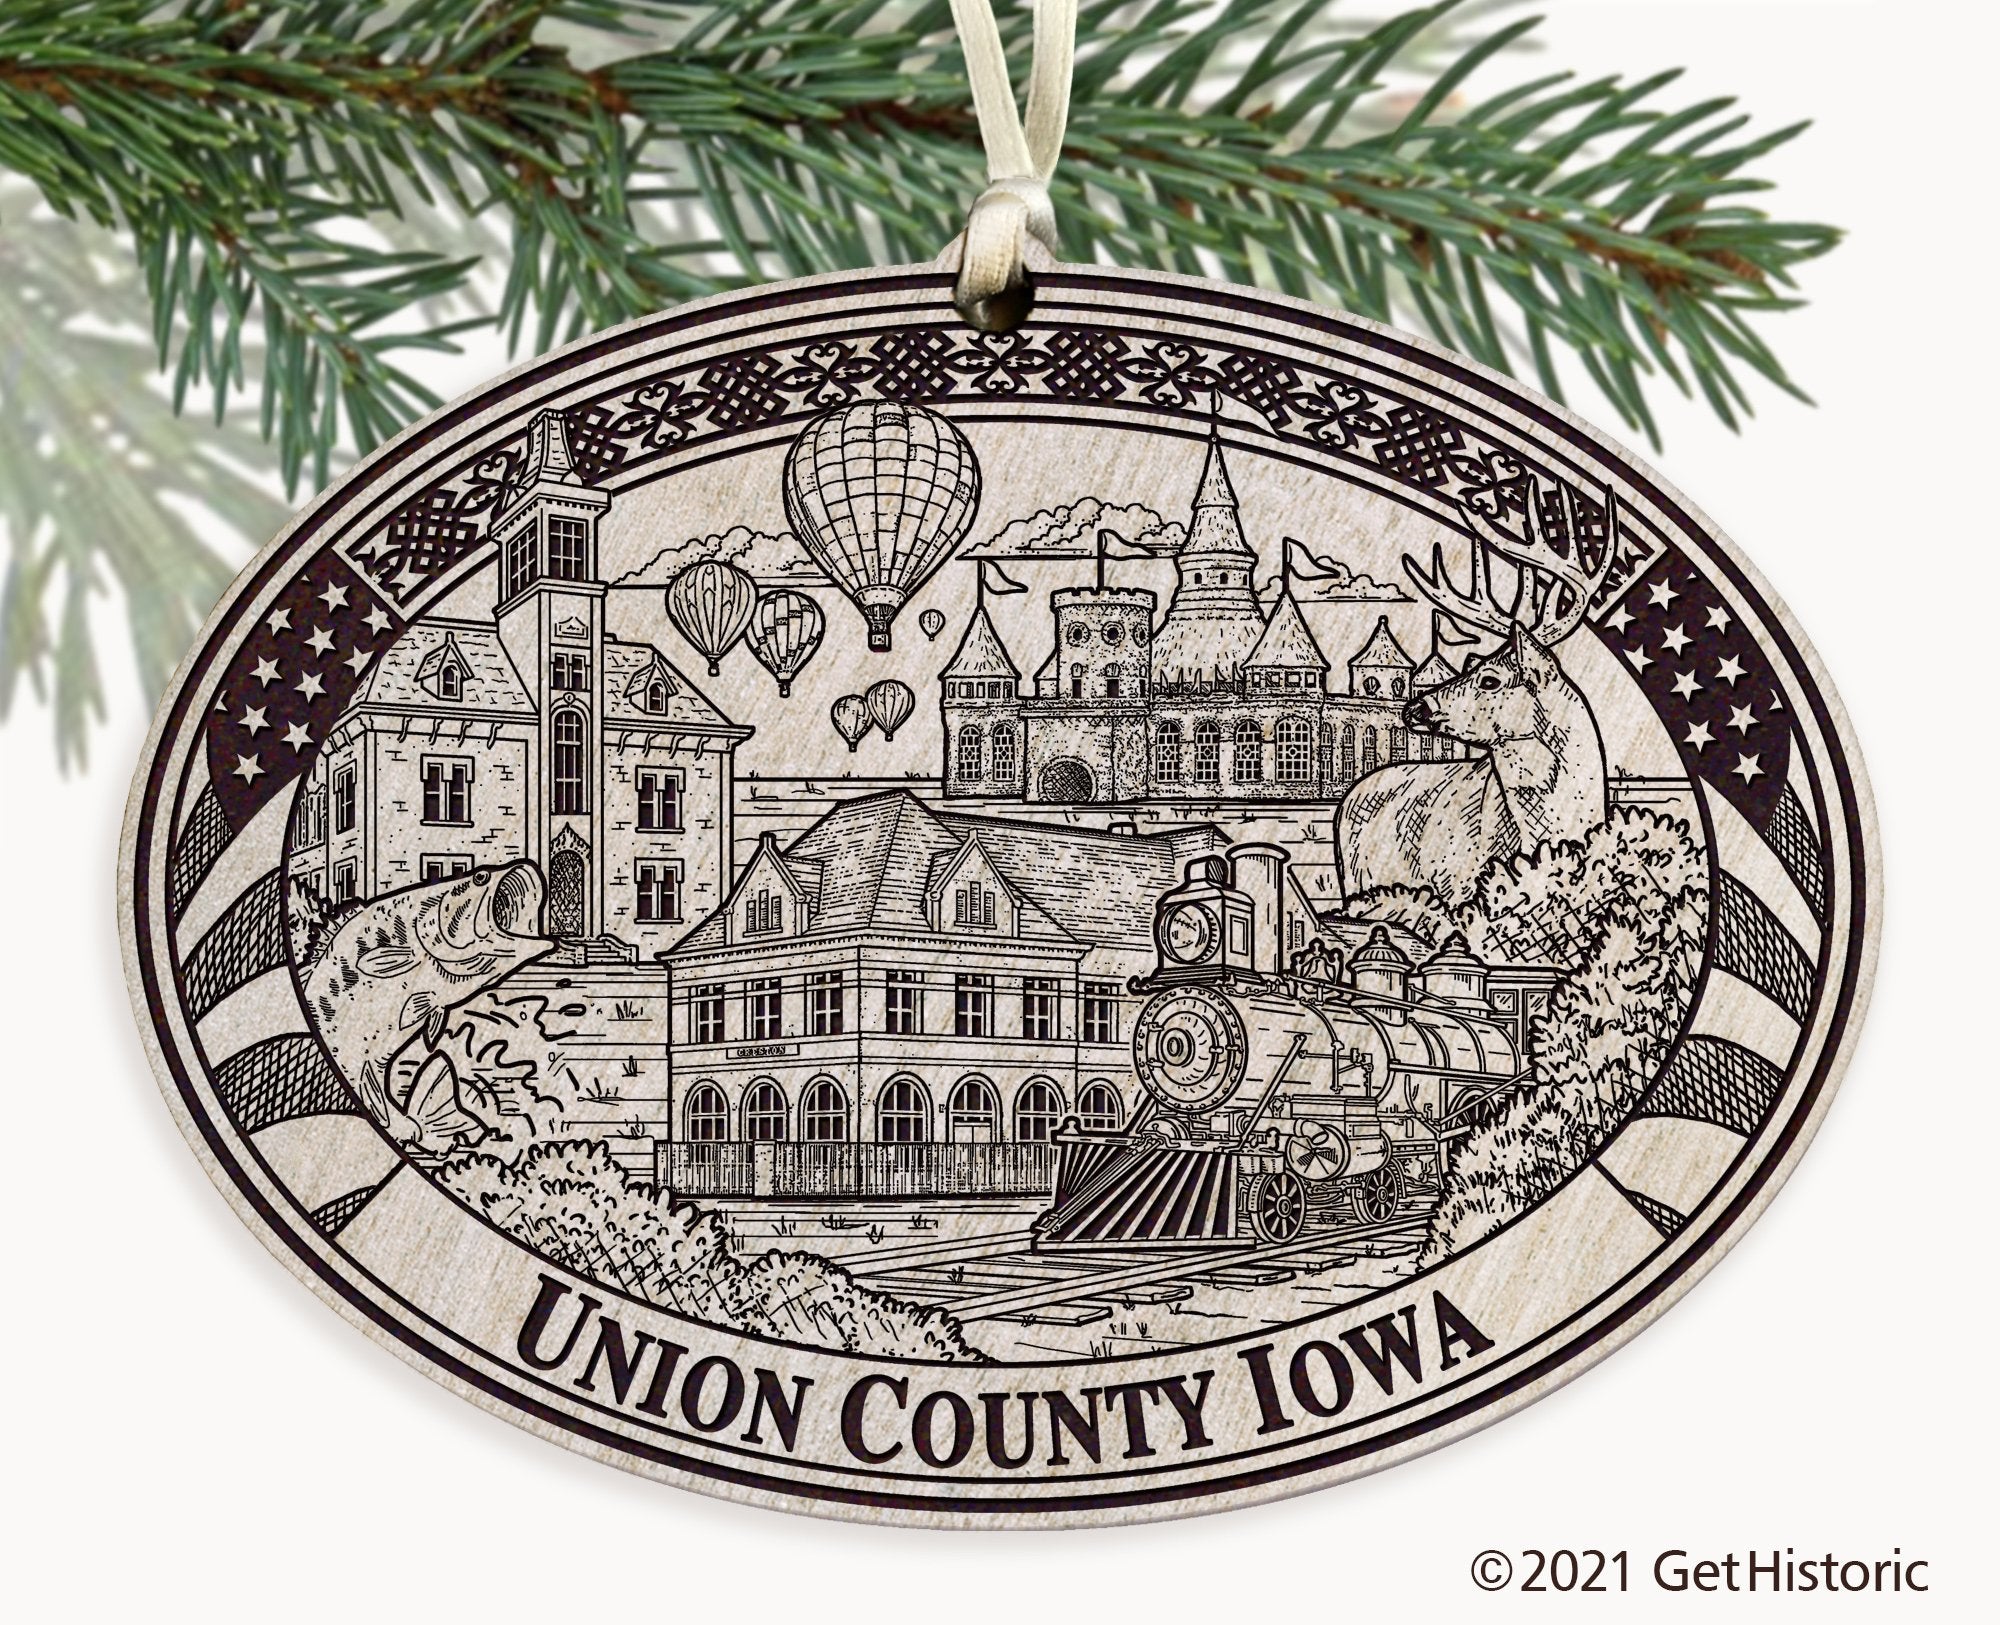 Union County Iowa Engraved Ornament